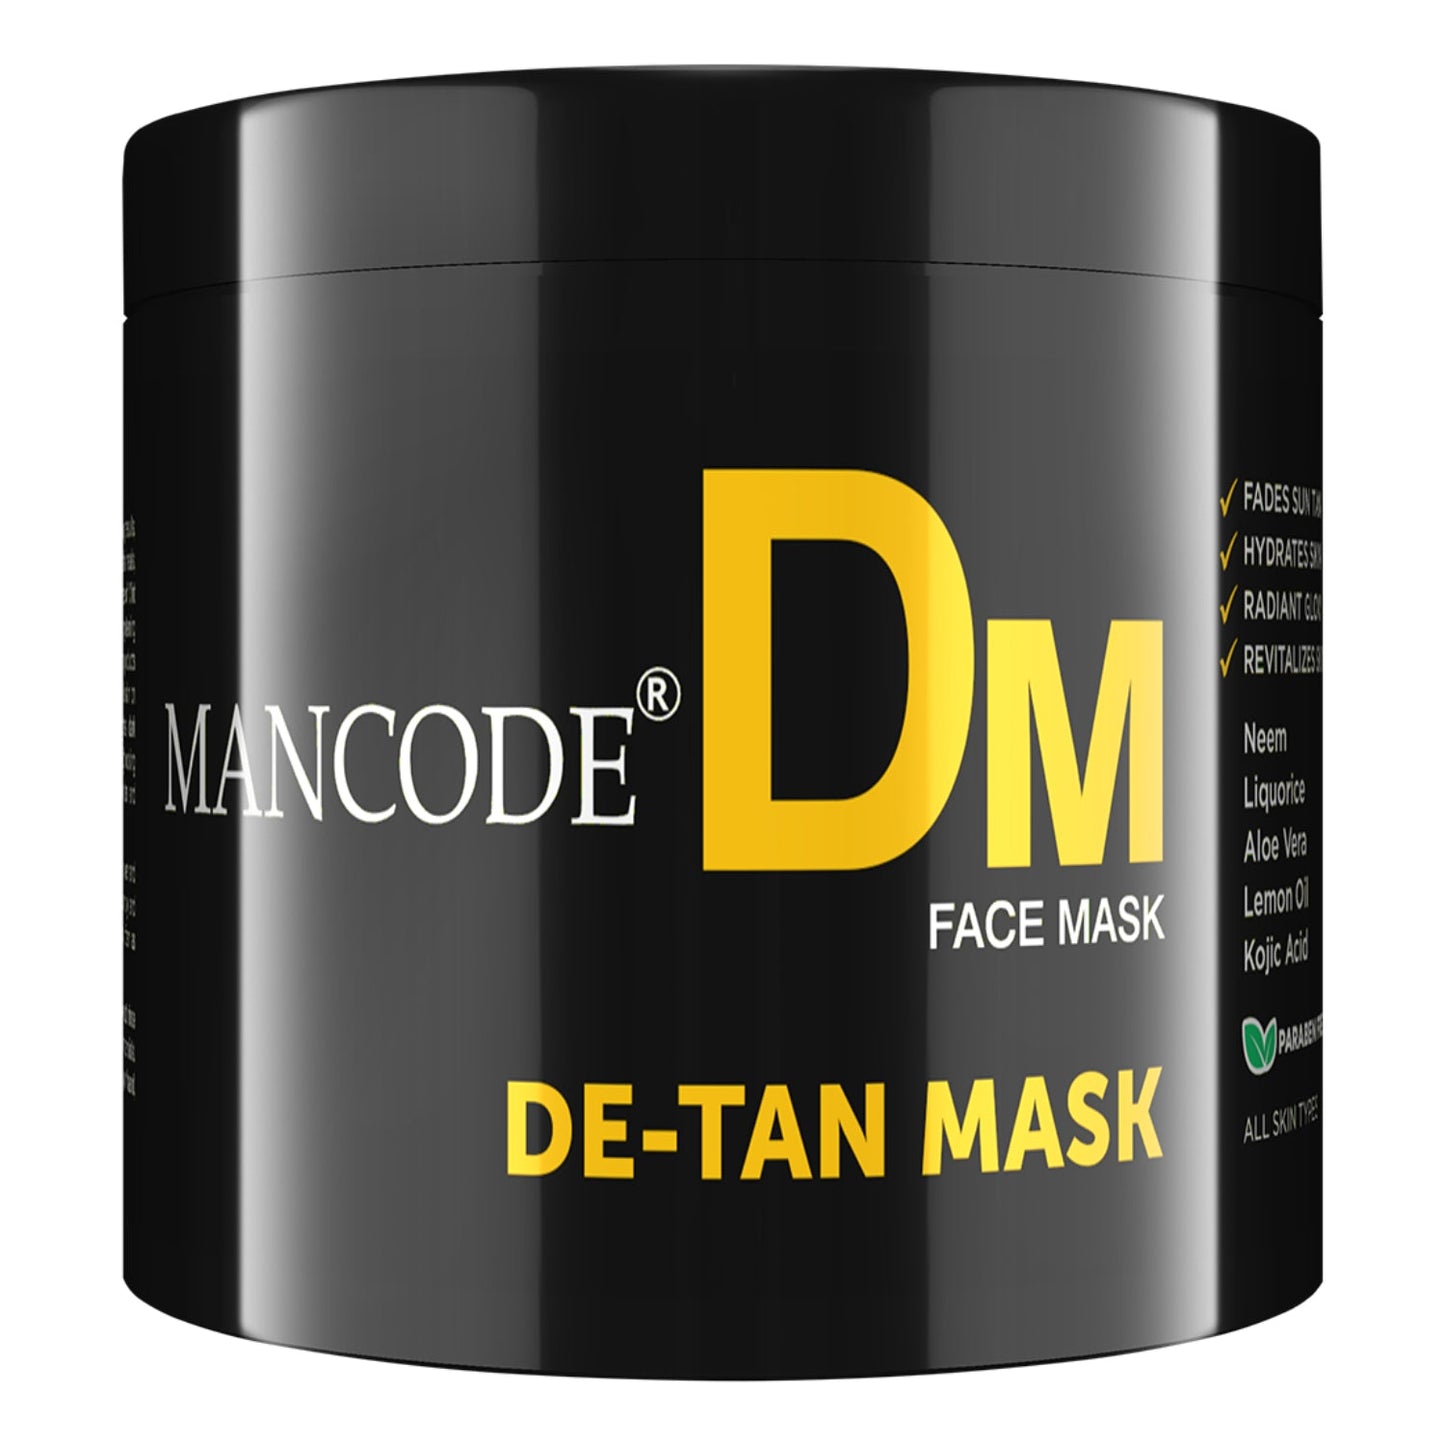 De-Tan Mask 100gm